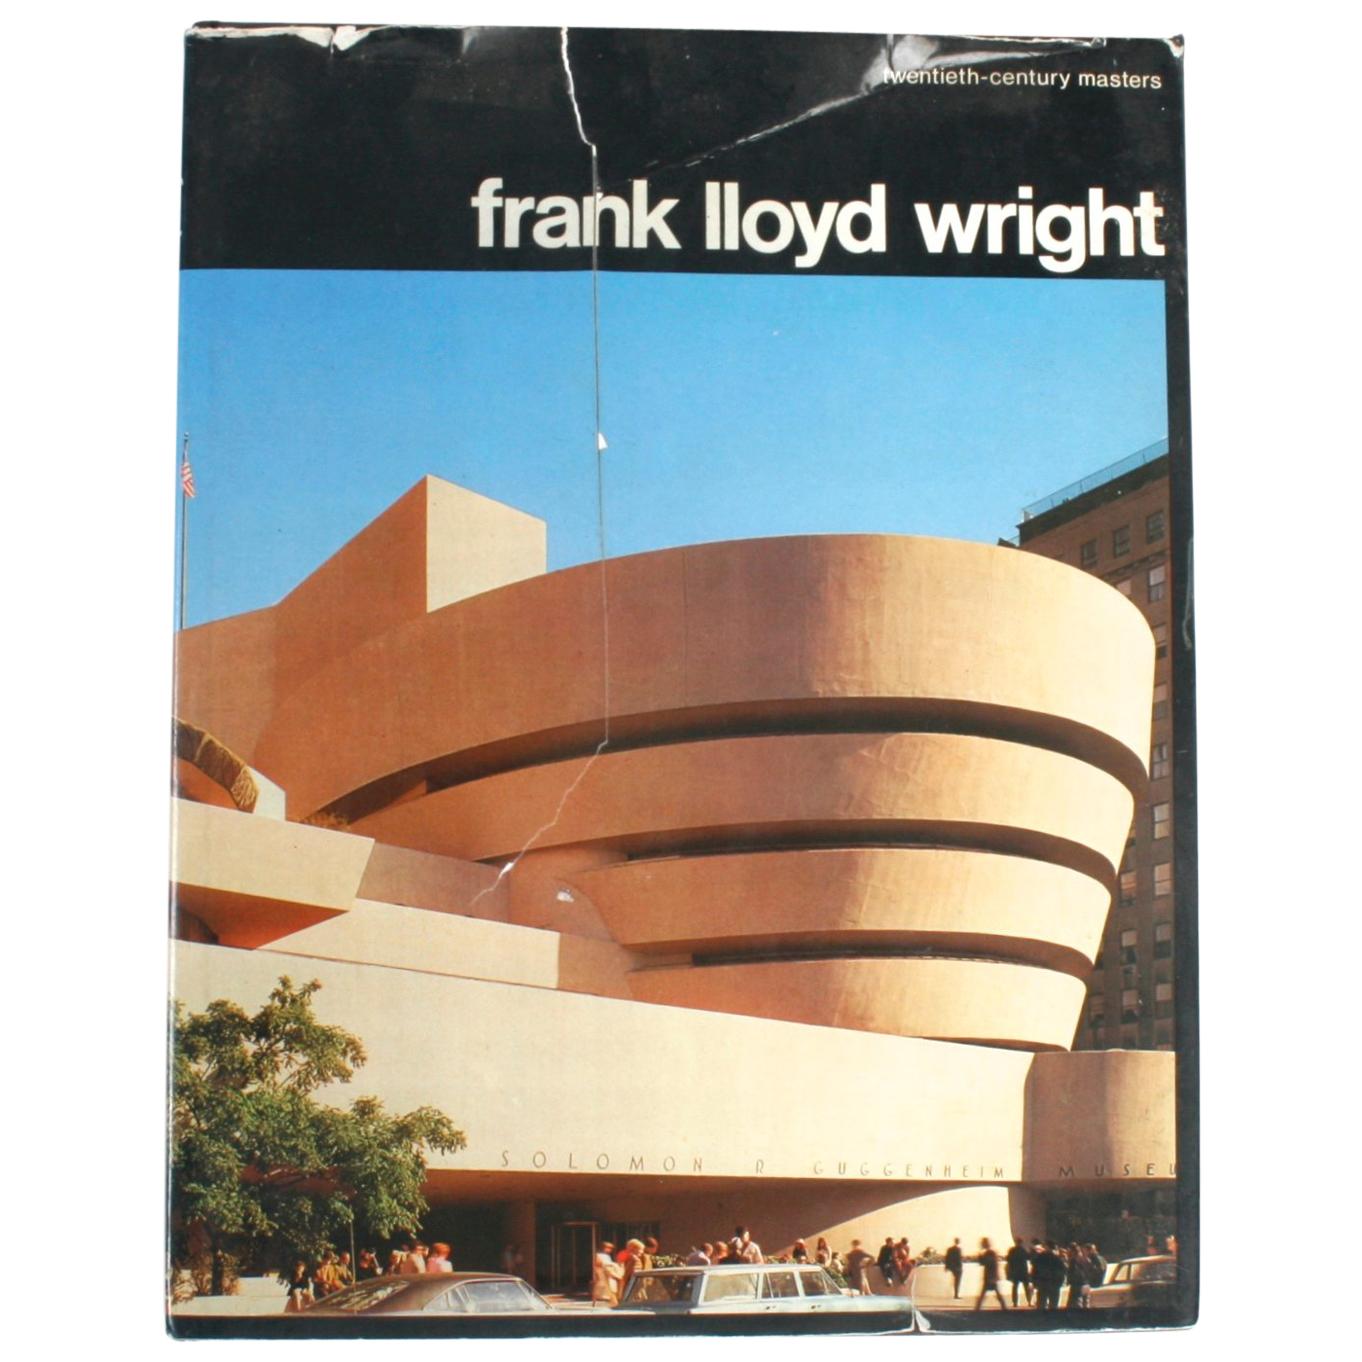 Frank Lloyd Wright par Marco Dezzi Bardeschi